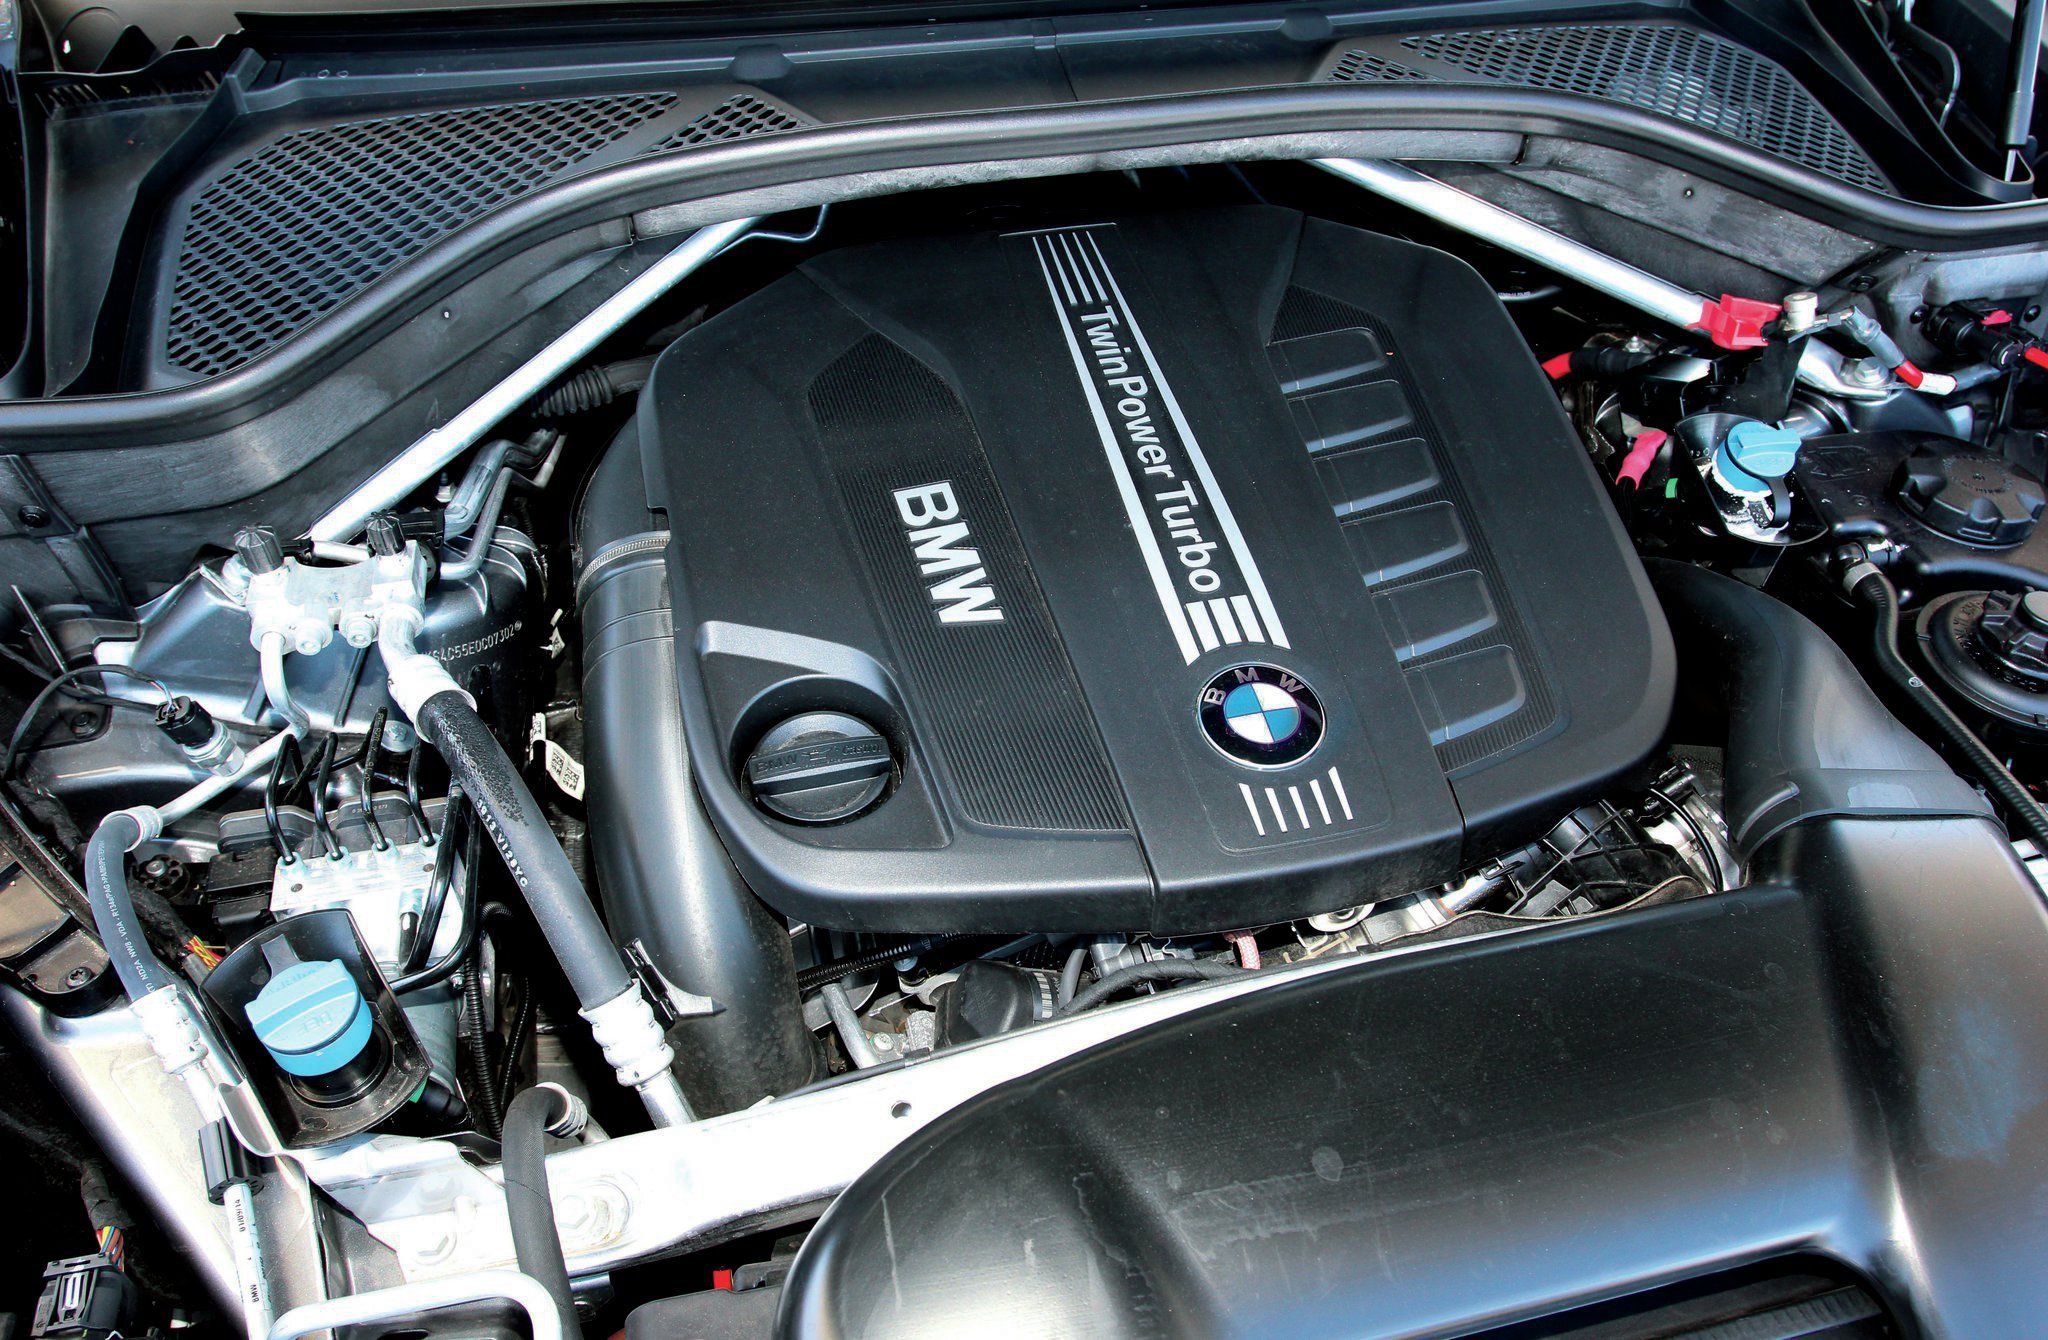 Bmw x5 3.0 дизель. БМВ x5 дизель. BMW x5 дизель 3.0 v6. Двигатель BMW x5 35d. БМВ 5.5 дизель.